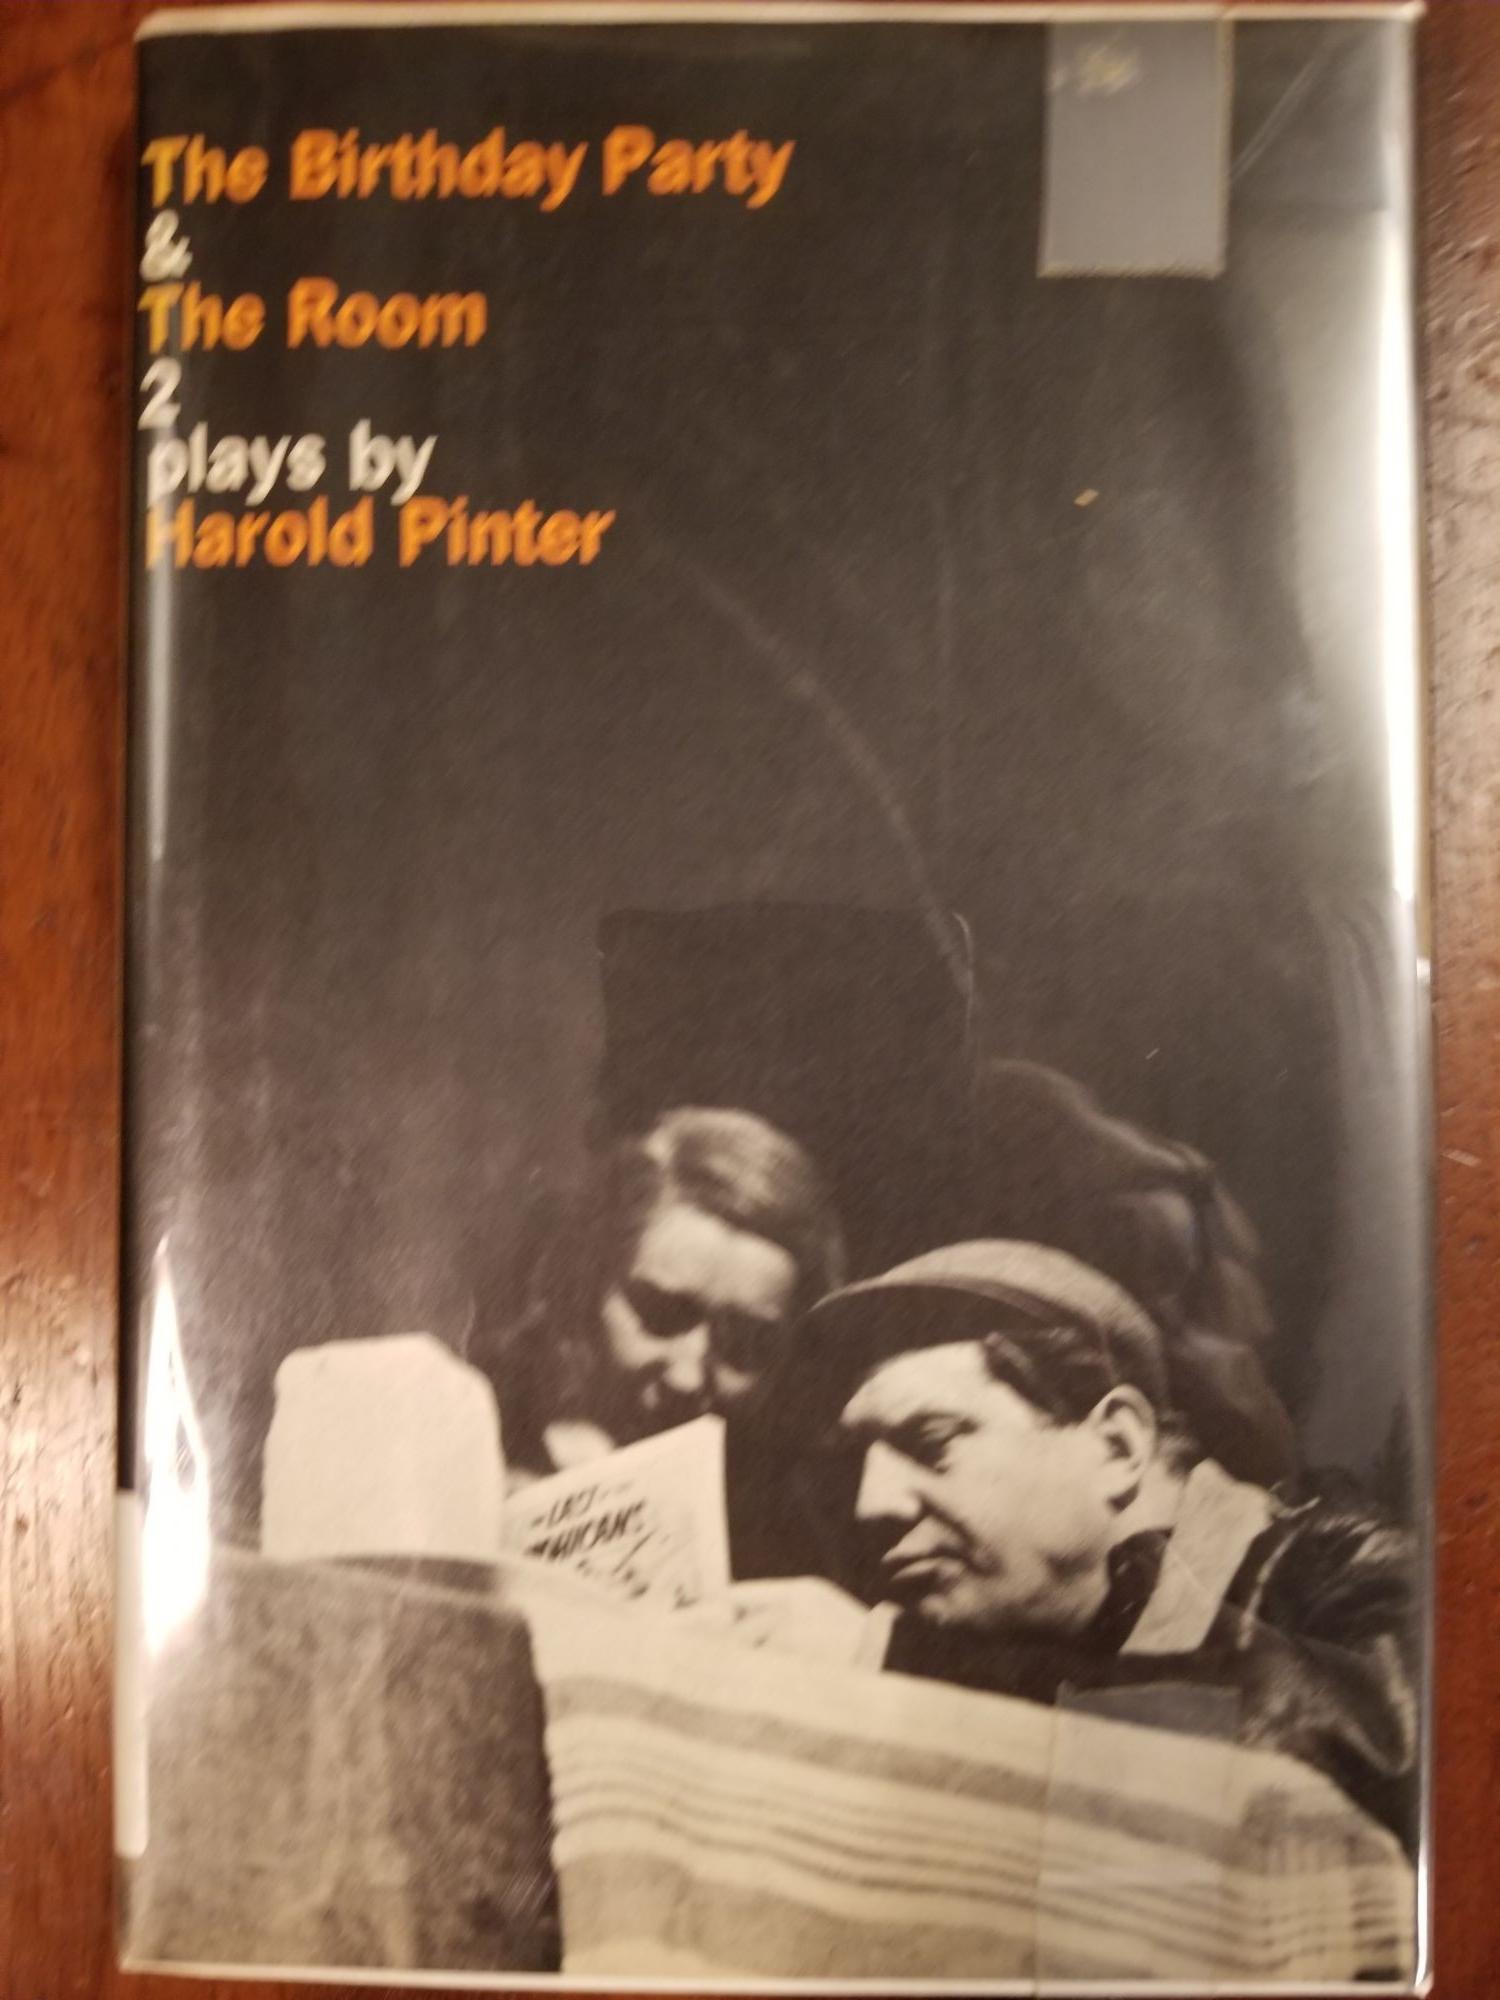 Harold pinter the room pdf